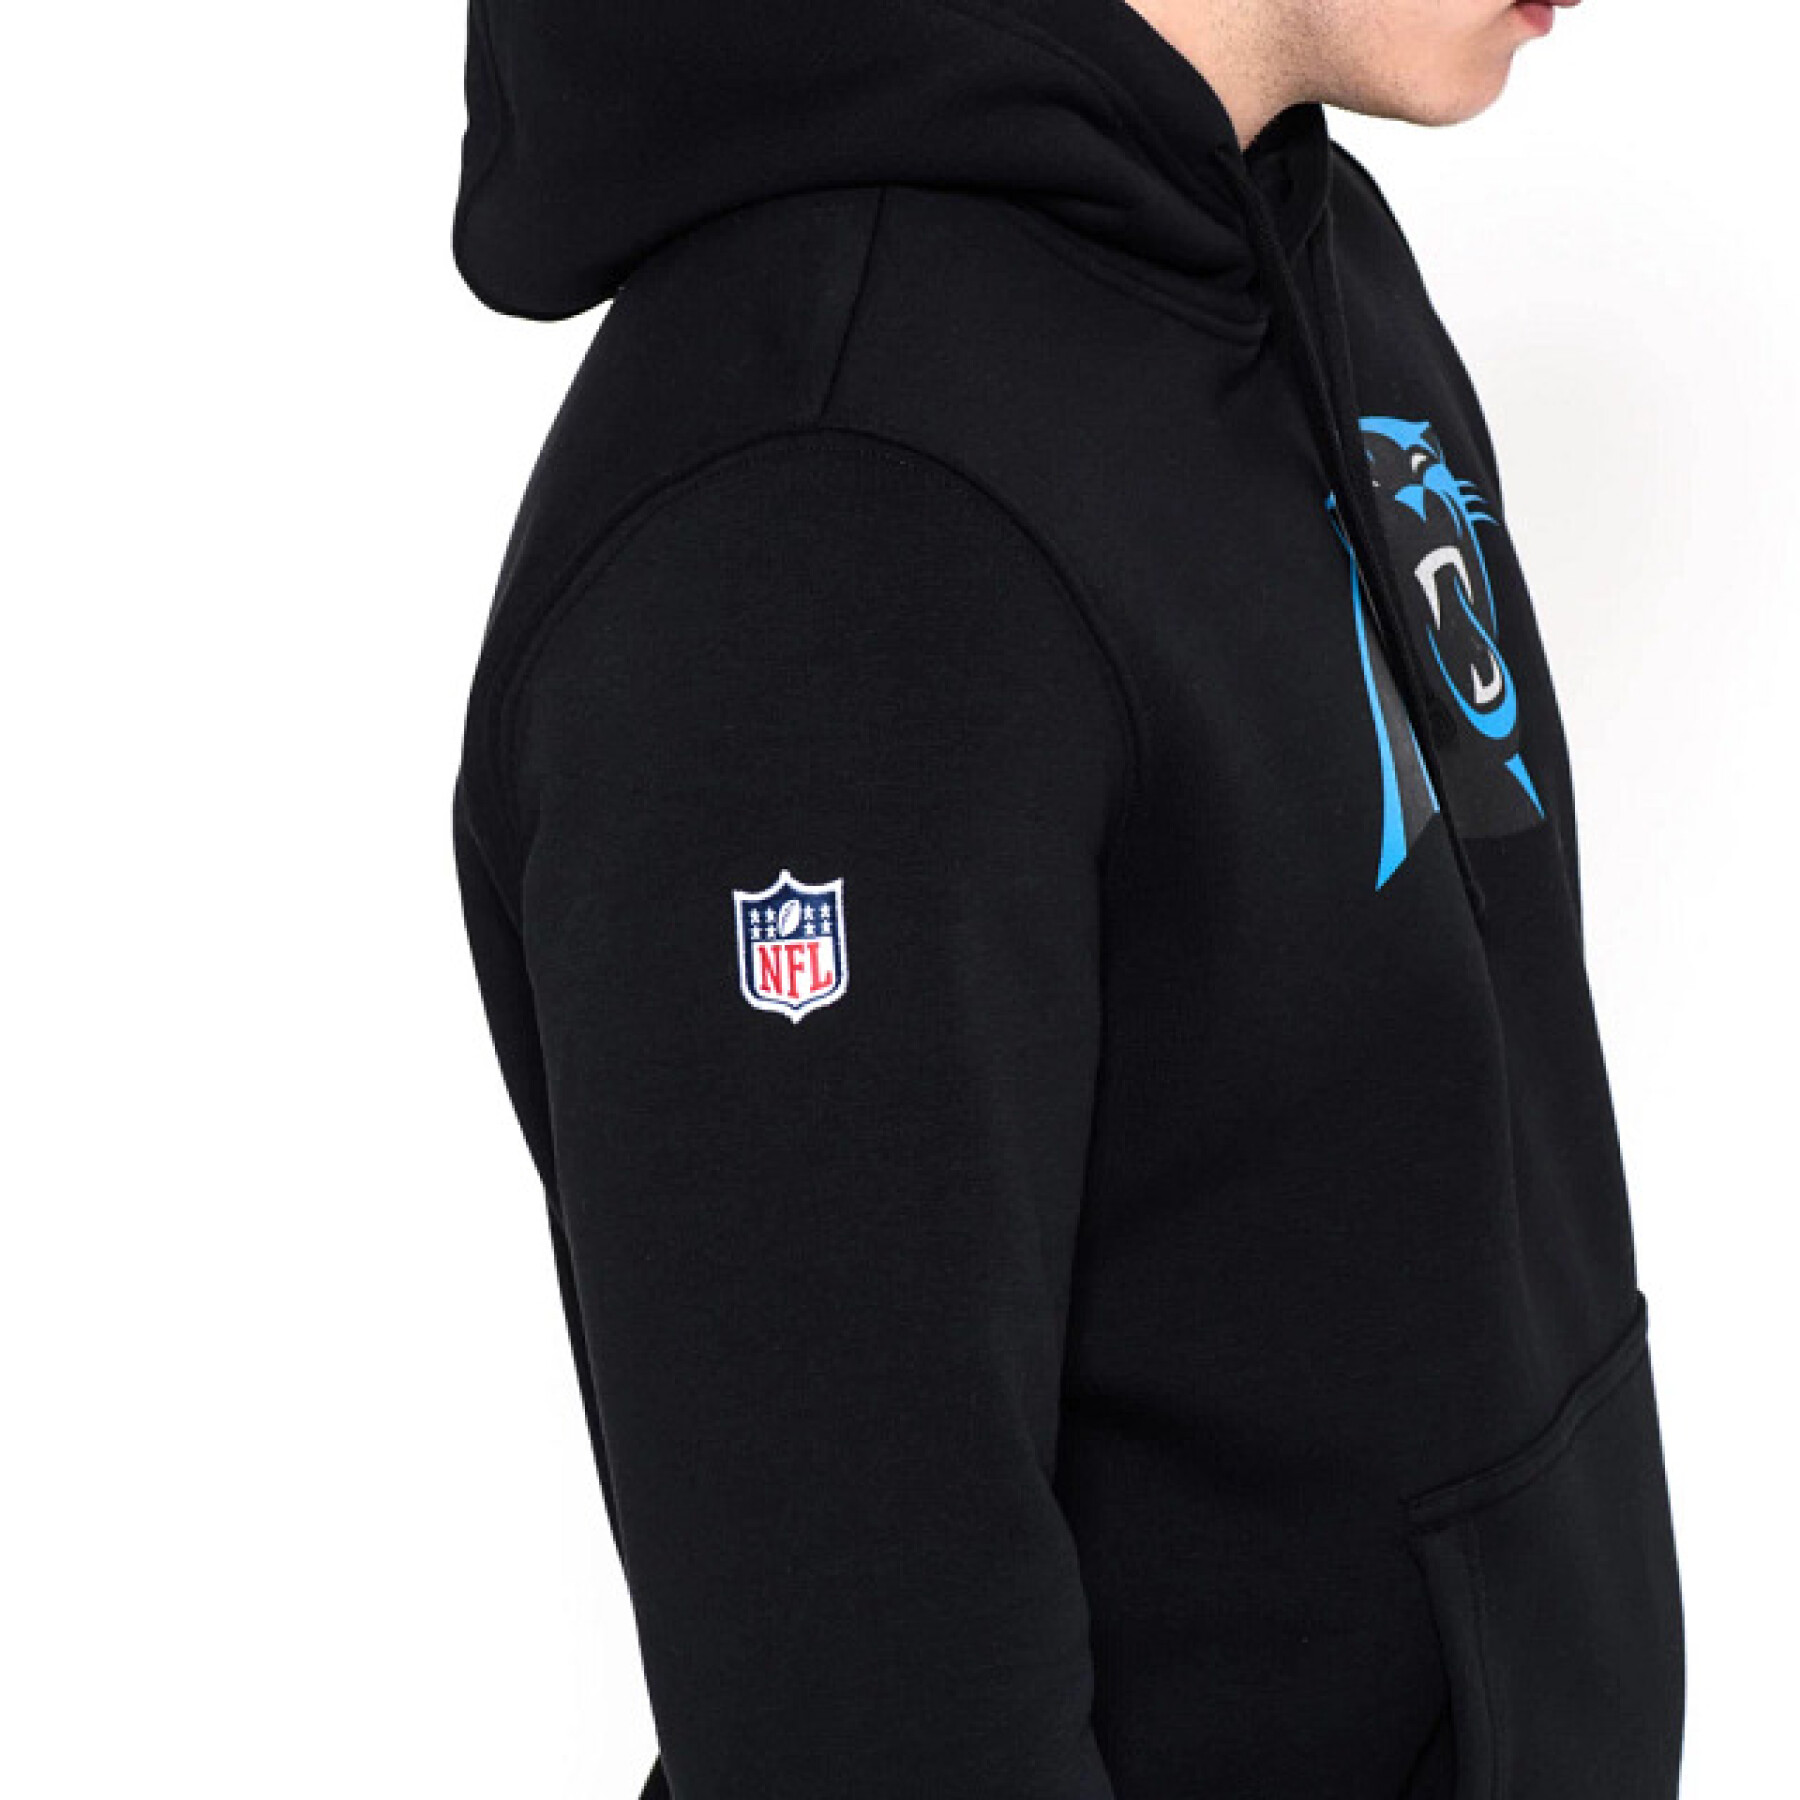 Hooded sweatshirt Panthers NFL